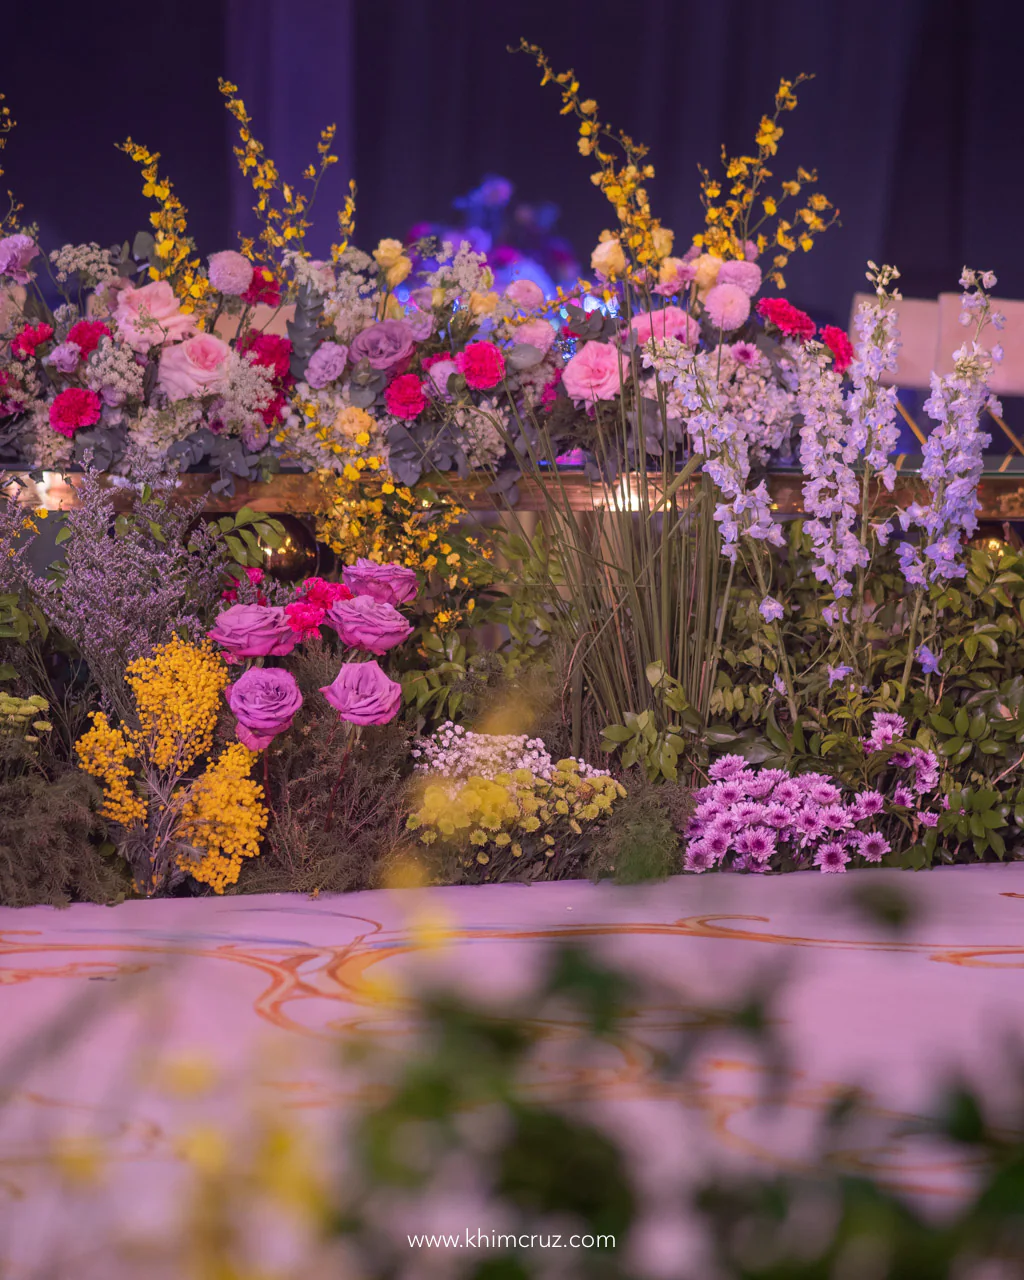 disney enchanted movie inspired 18th birthday debut central park floral landscape detail by Khim Cruz